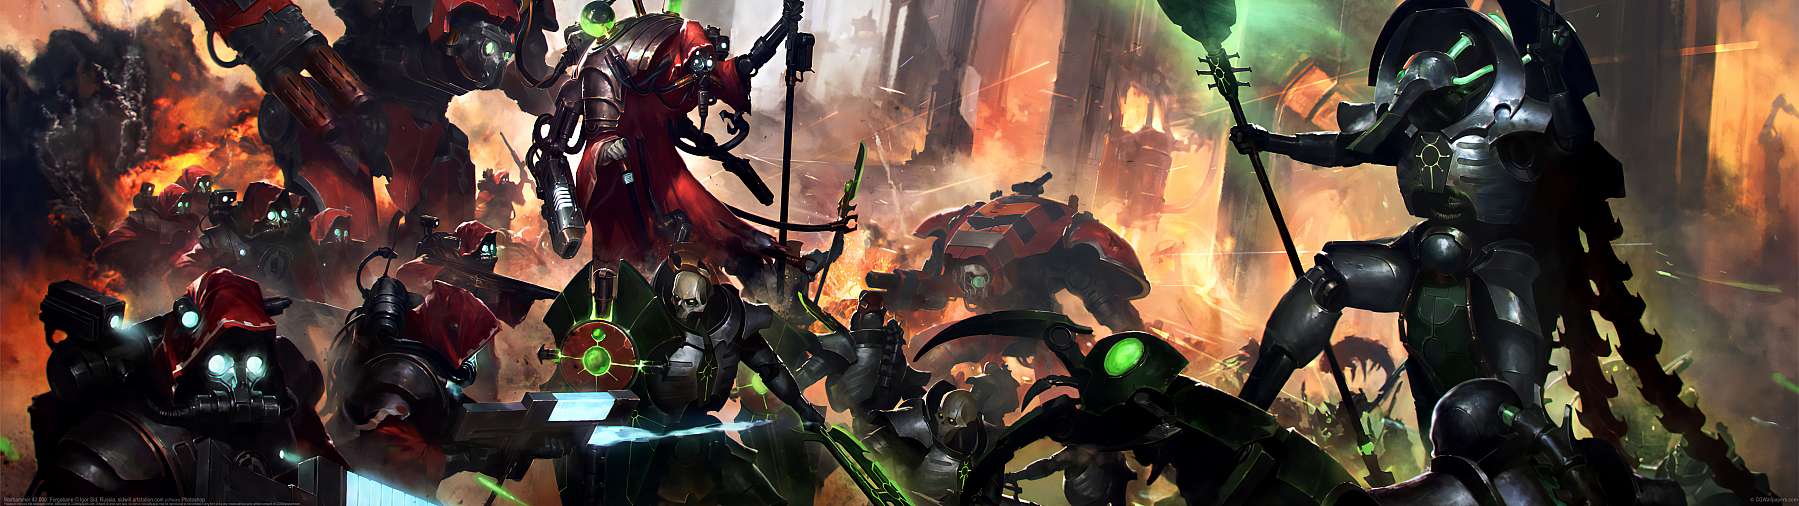 Warhammer 40.000: Forgebane ultrawide wallpaper